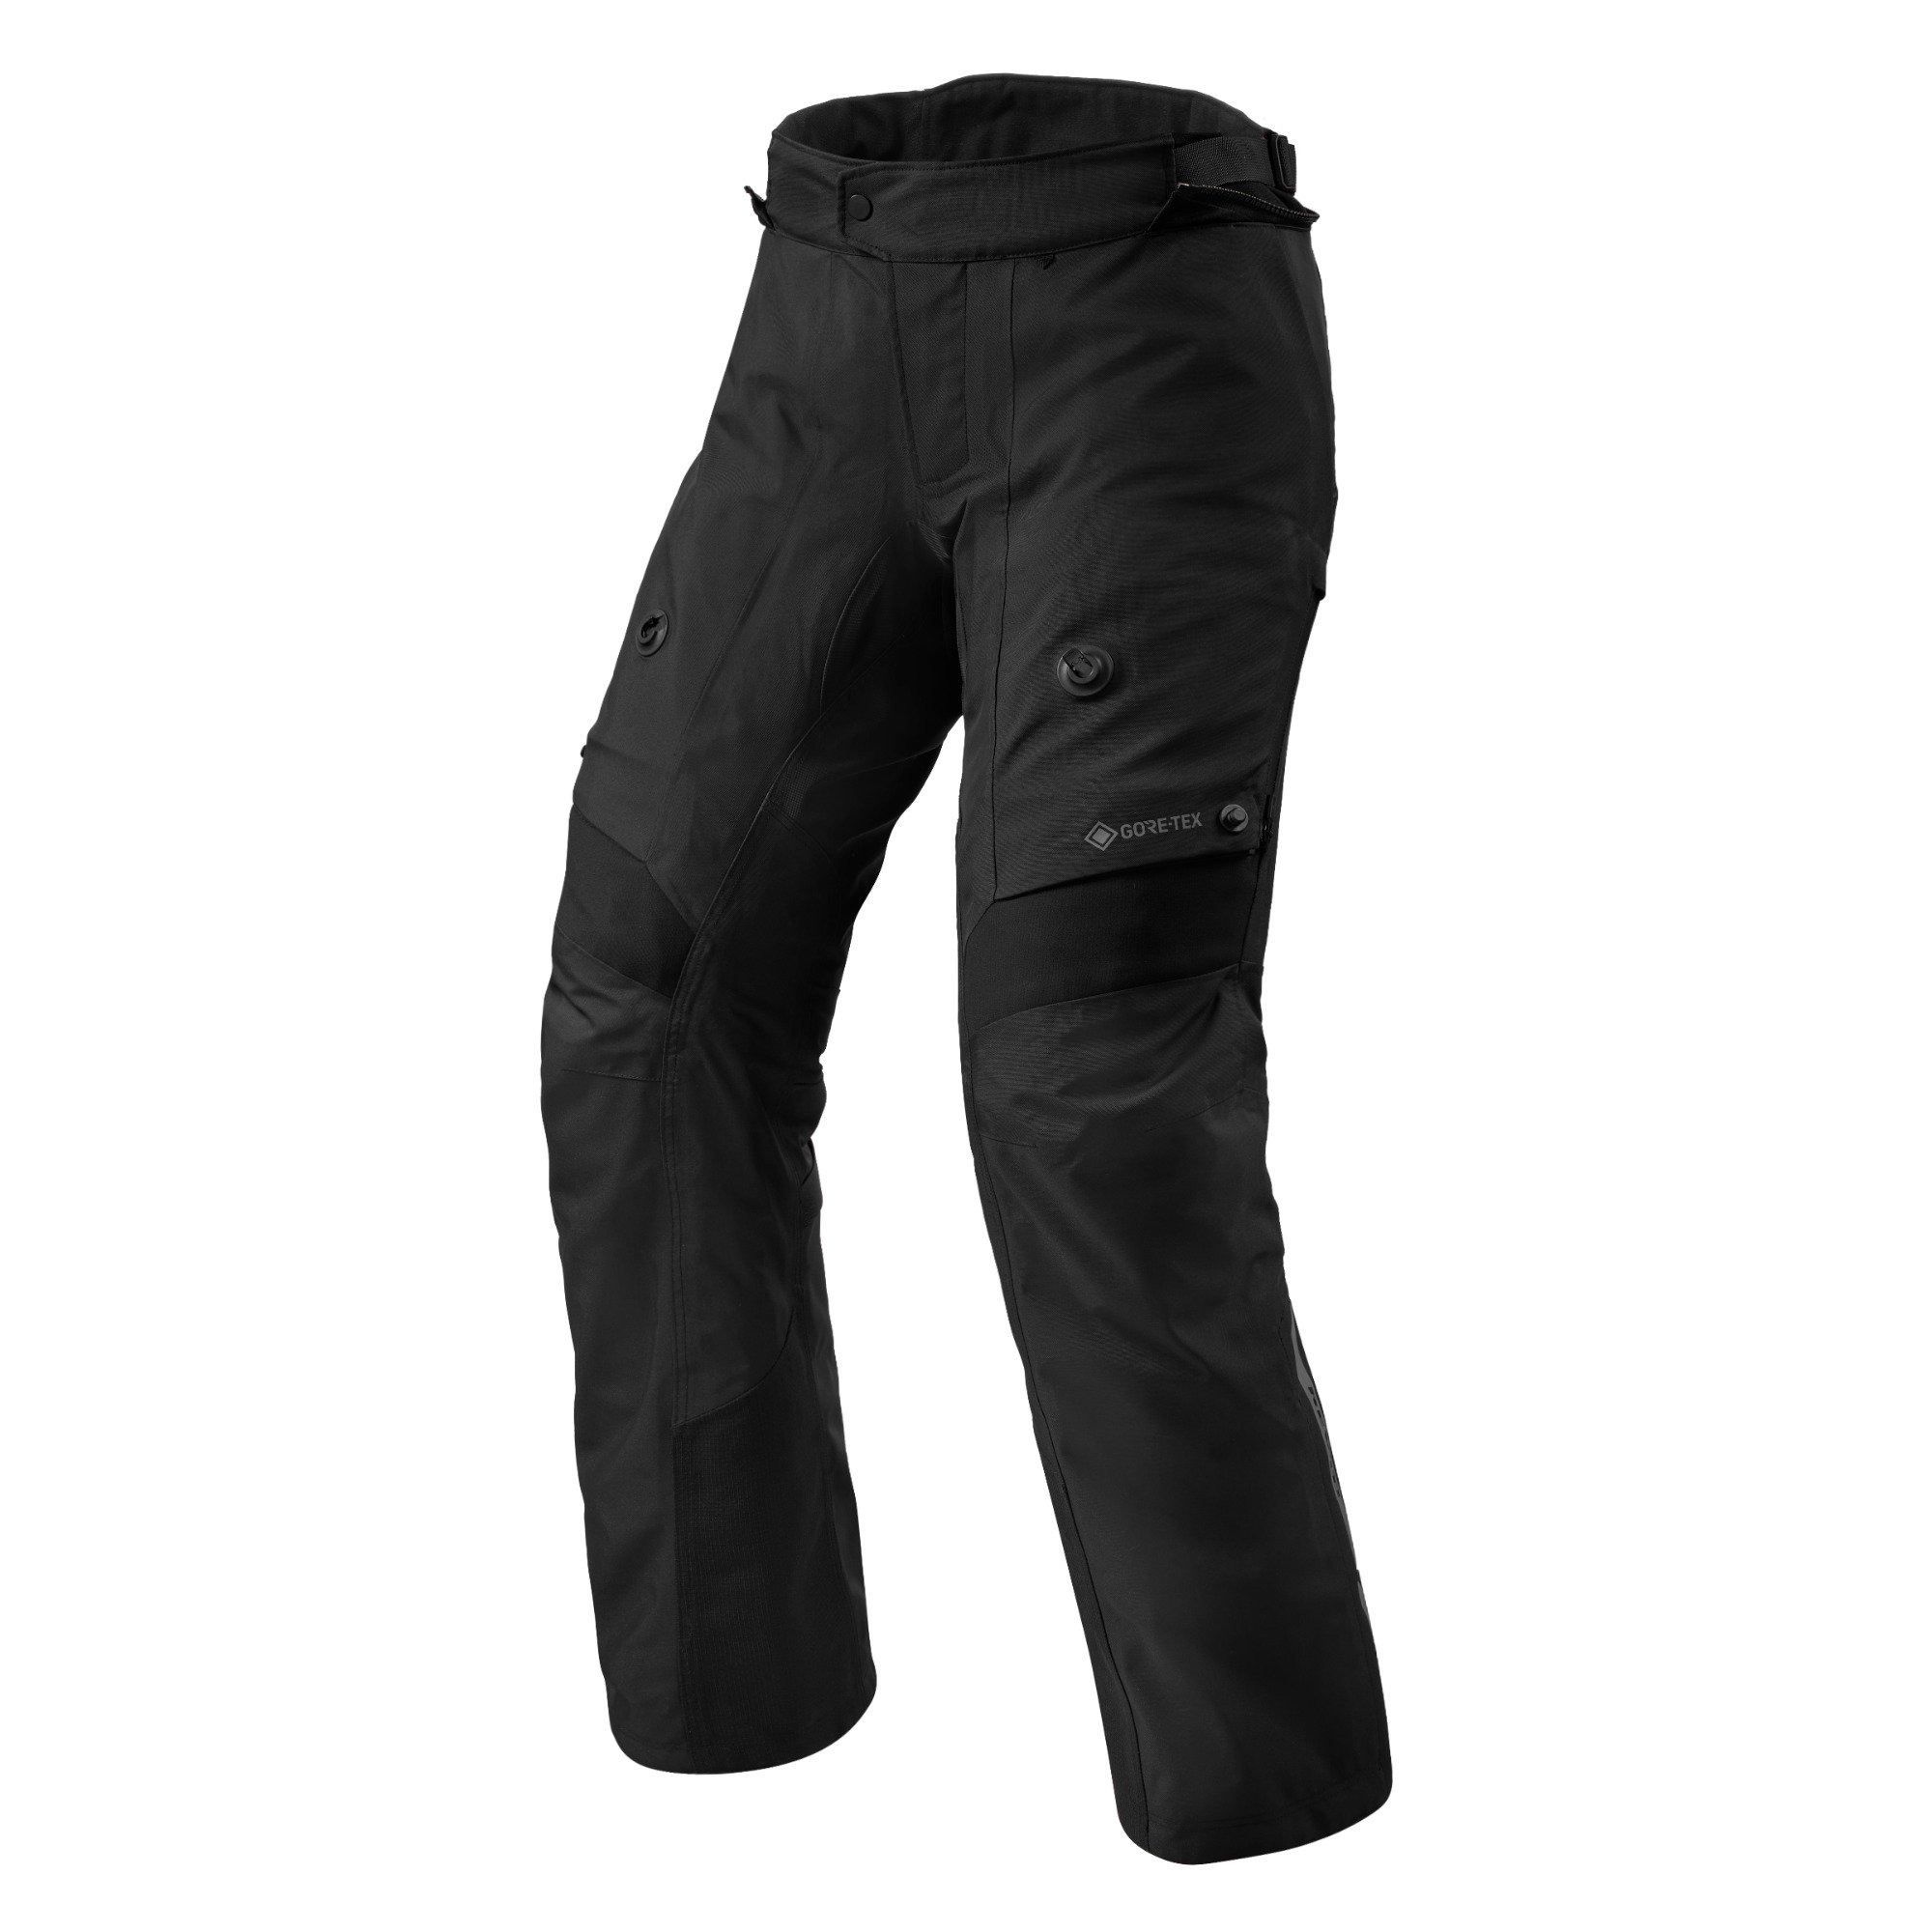 Image of REV'IT! Pants Poseidon 3 GTX Black Standard Motorcycle Pants Size 2XL ID 8700001362474